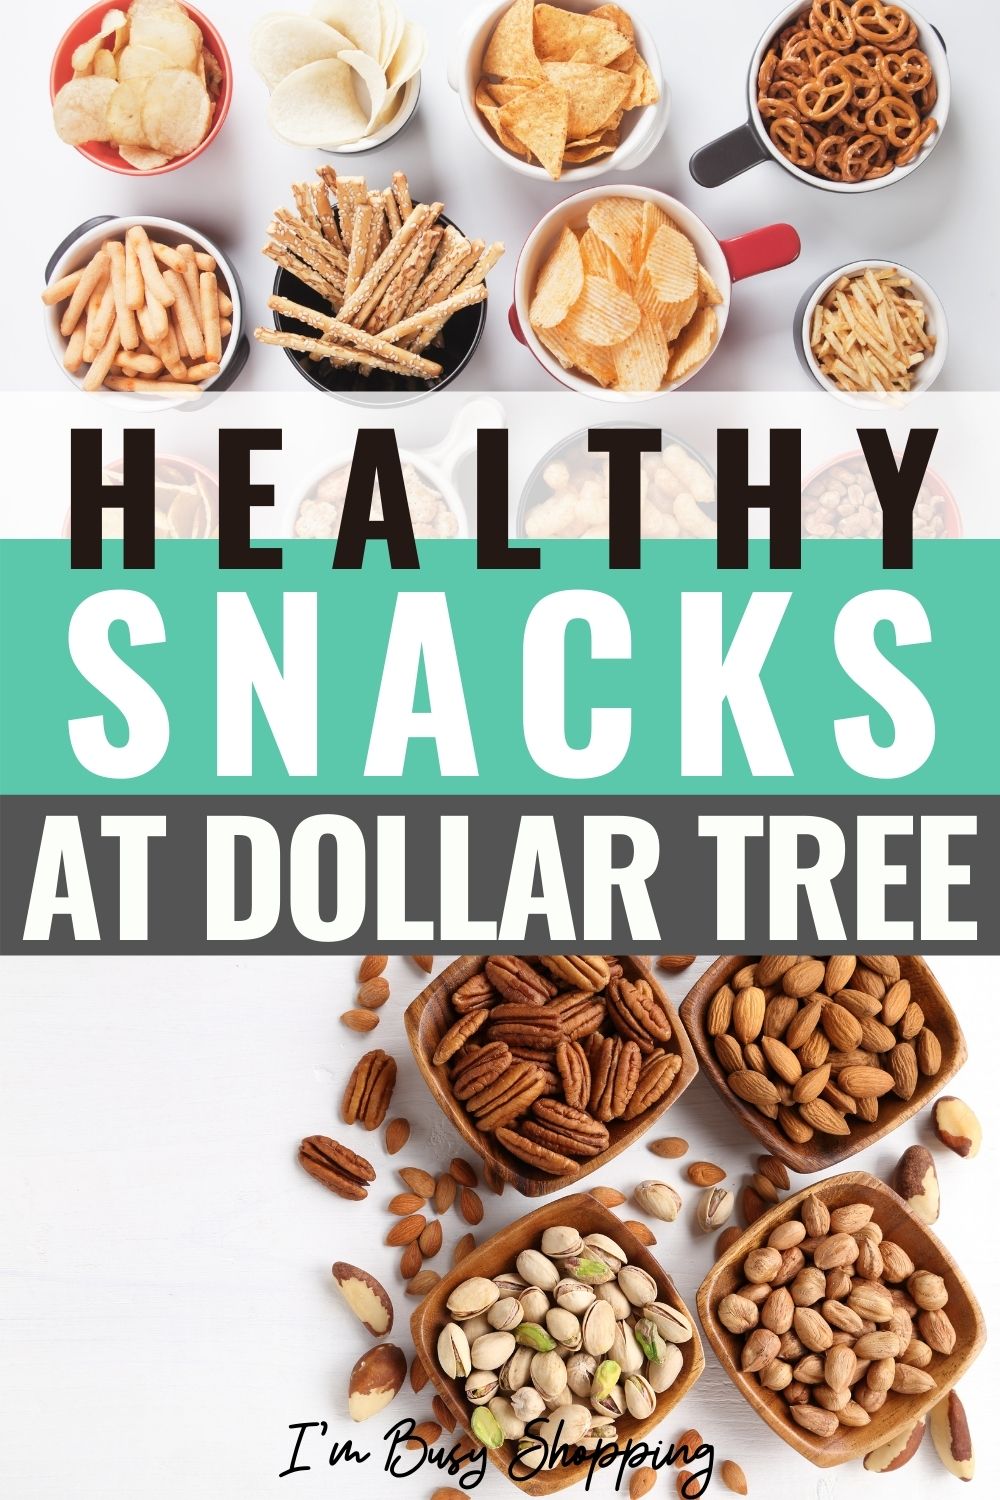 Healthy Dollar Tree Snacks » I'm Busy Shopping